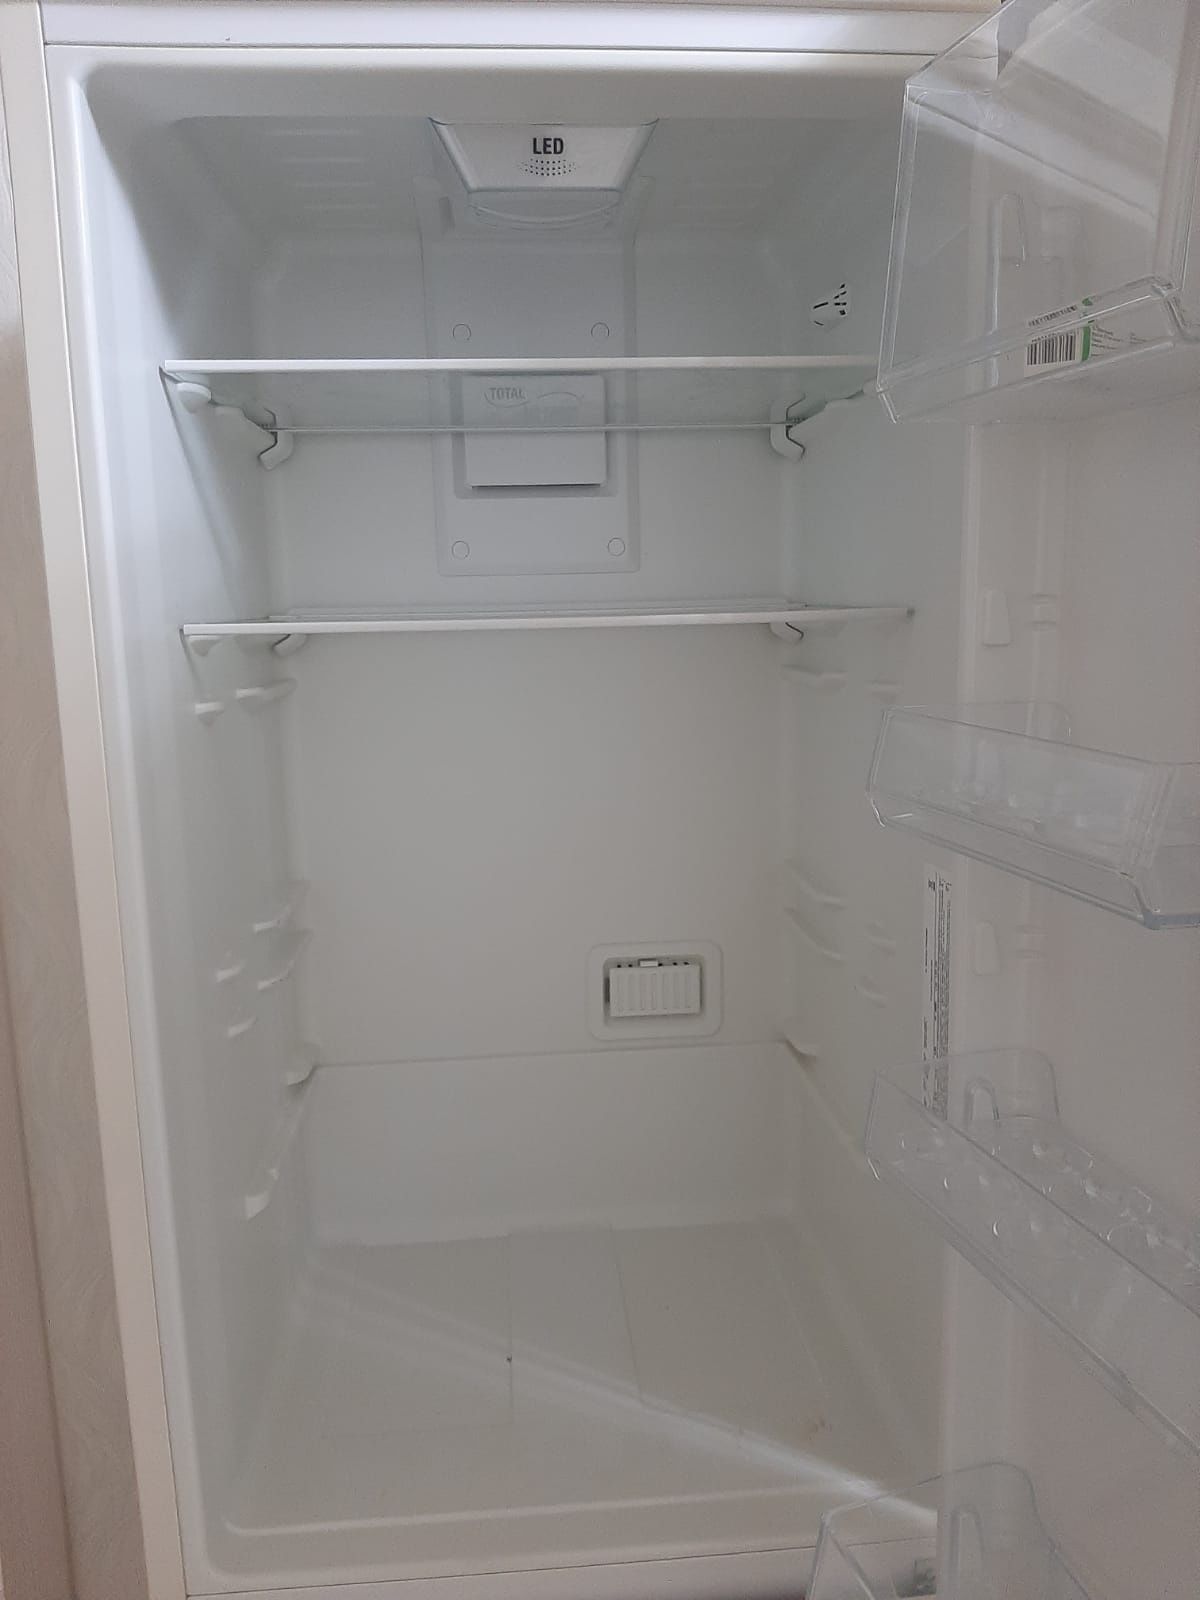 Продаю холодильник